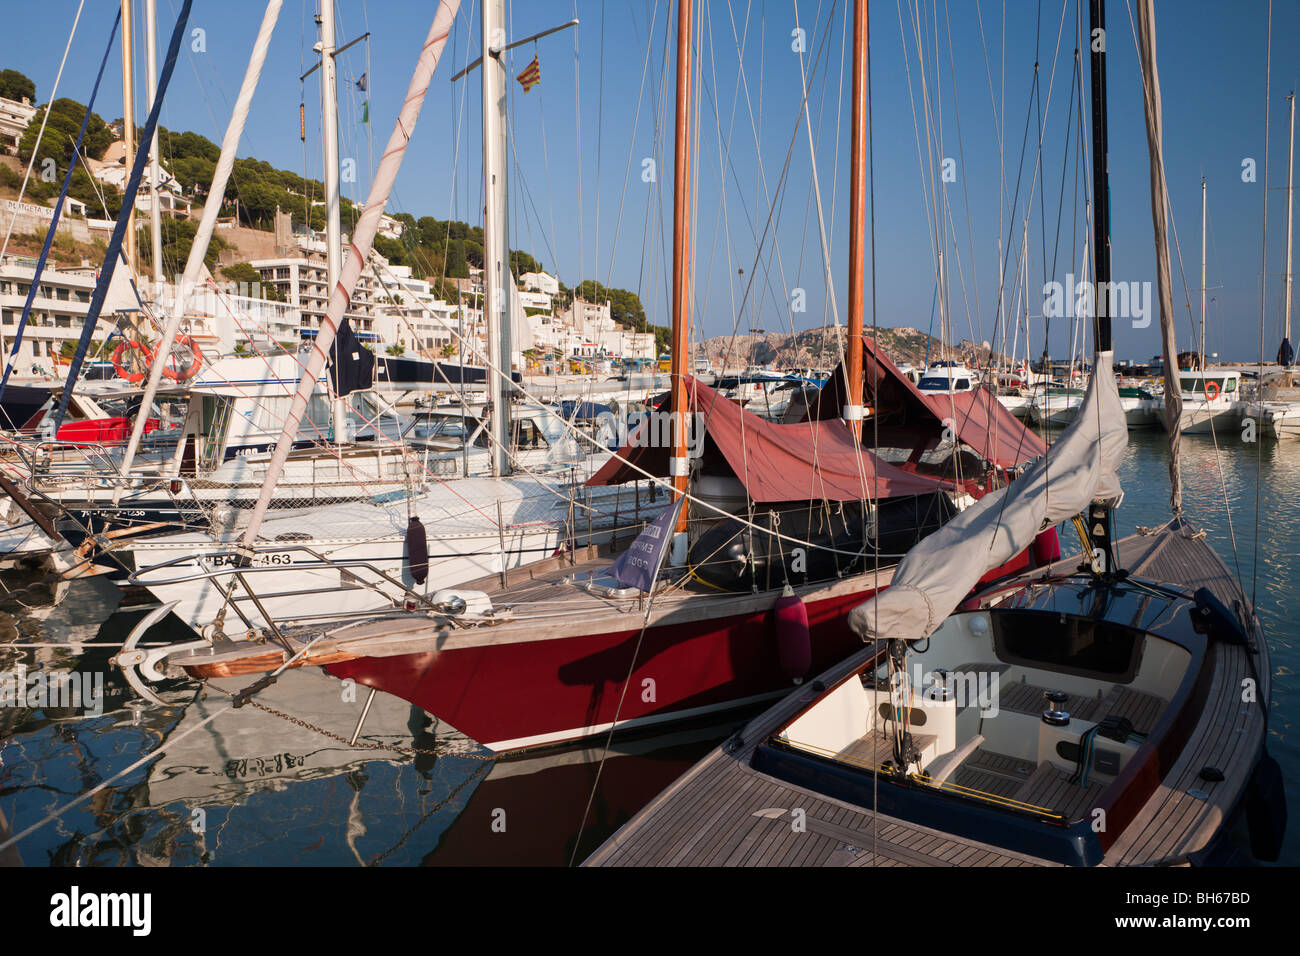 Port of Estartit, Costa Brava, Catalonia, Spain Stock Photo - Alamy